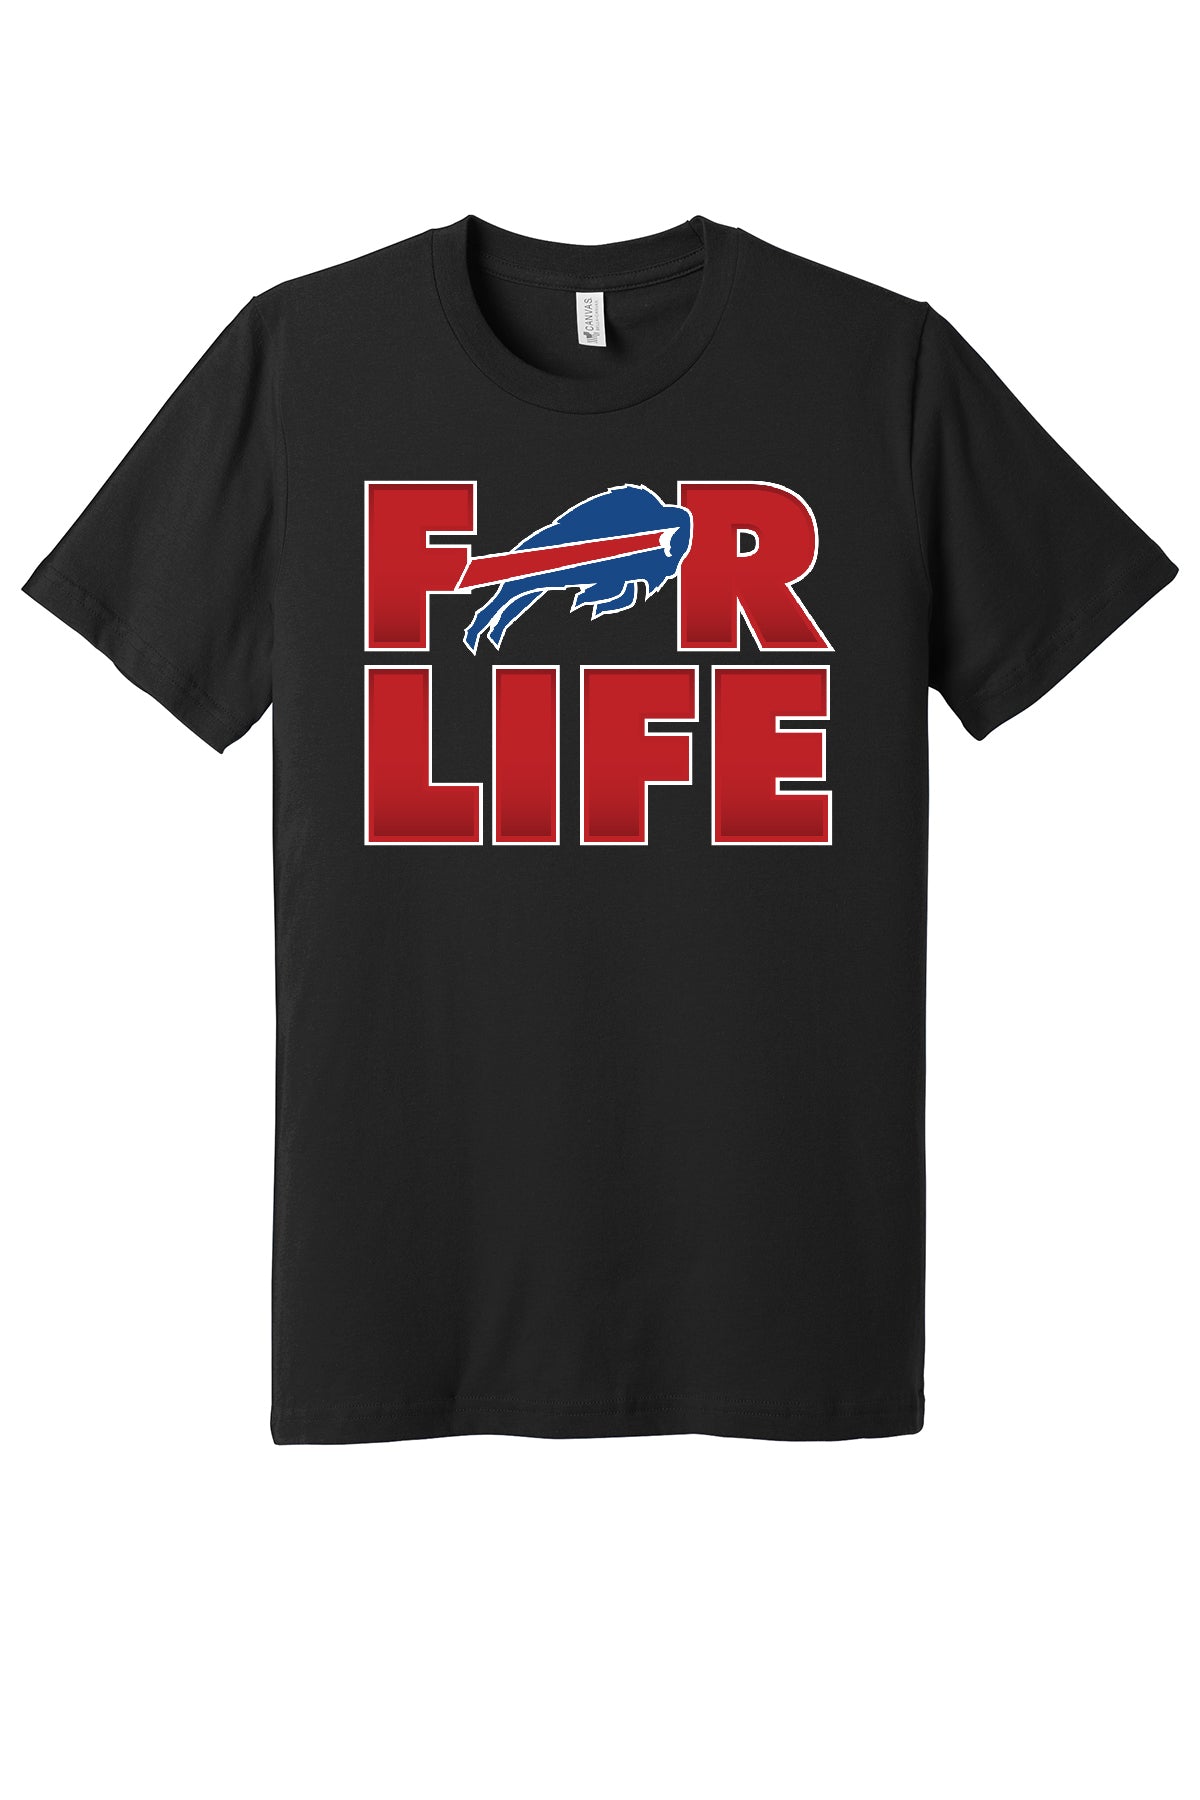 Buffalo-Bills-4-Life-Logo-Shirt-S-5Xl!!!-Fast-Ship!